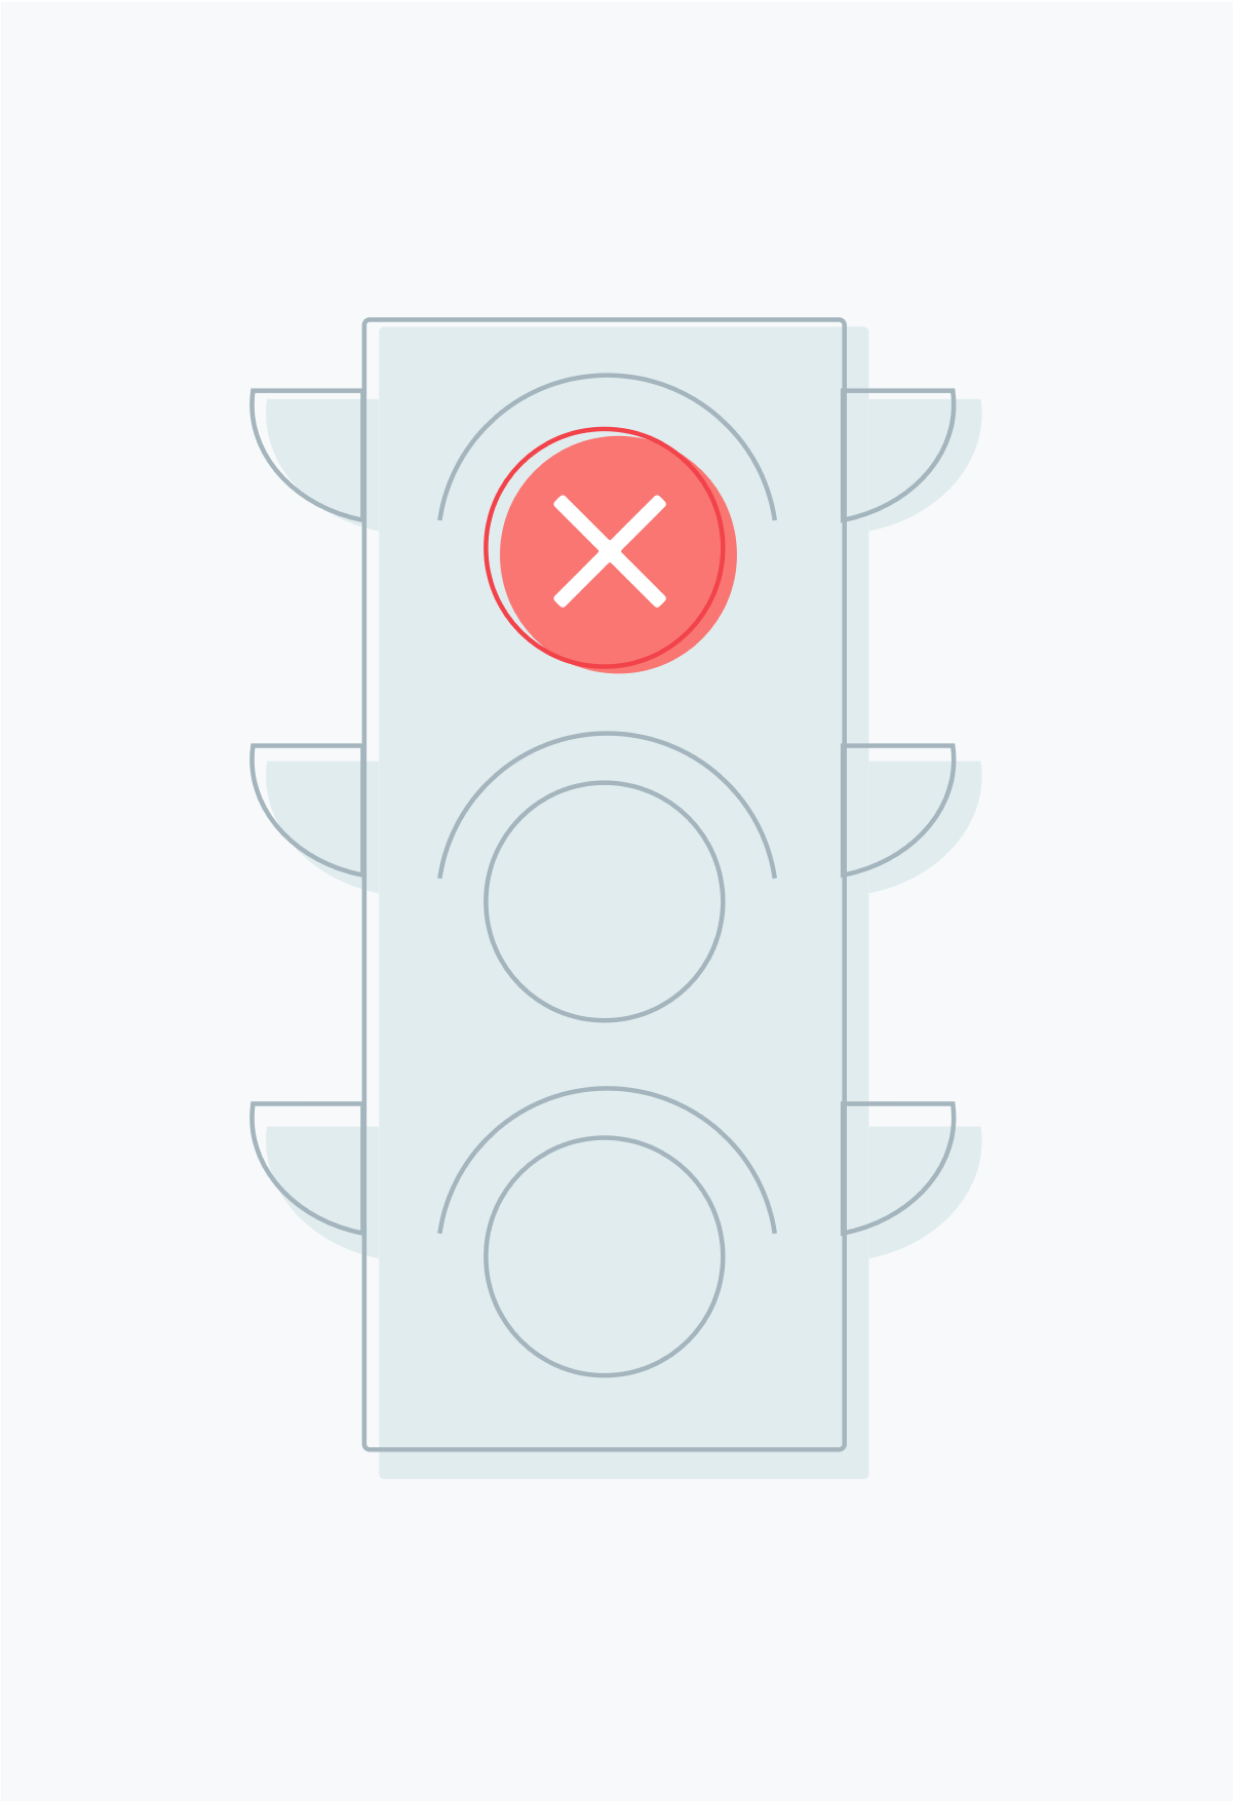 Illustration of a red traffic light